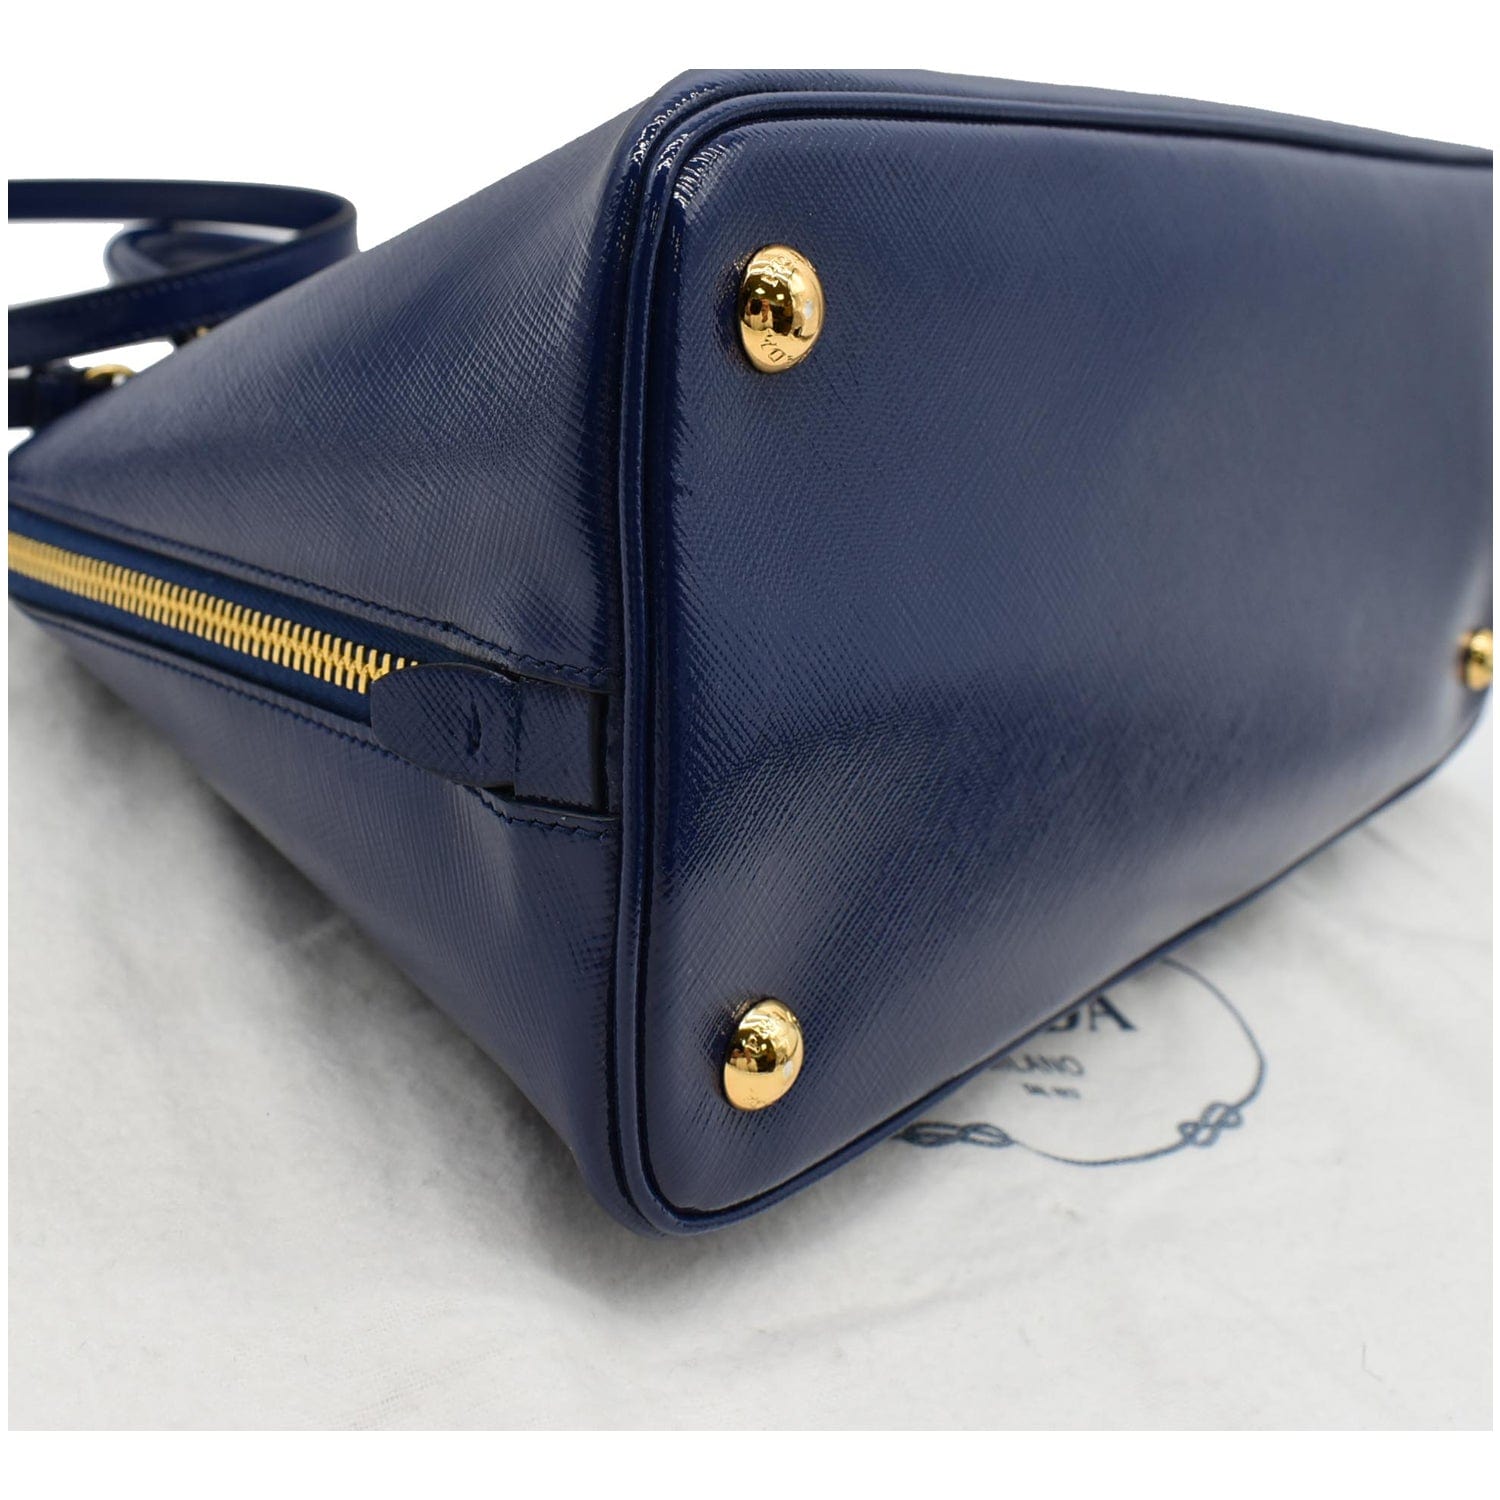 Prada Double Saffiano Navy Blue Leather Bag